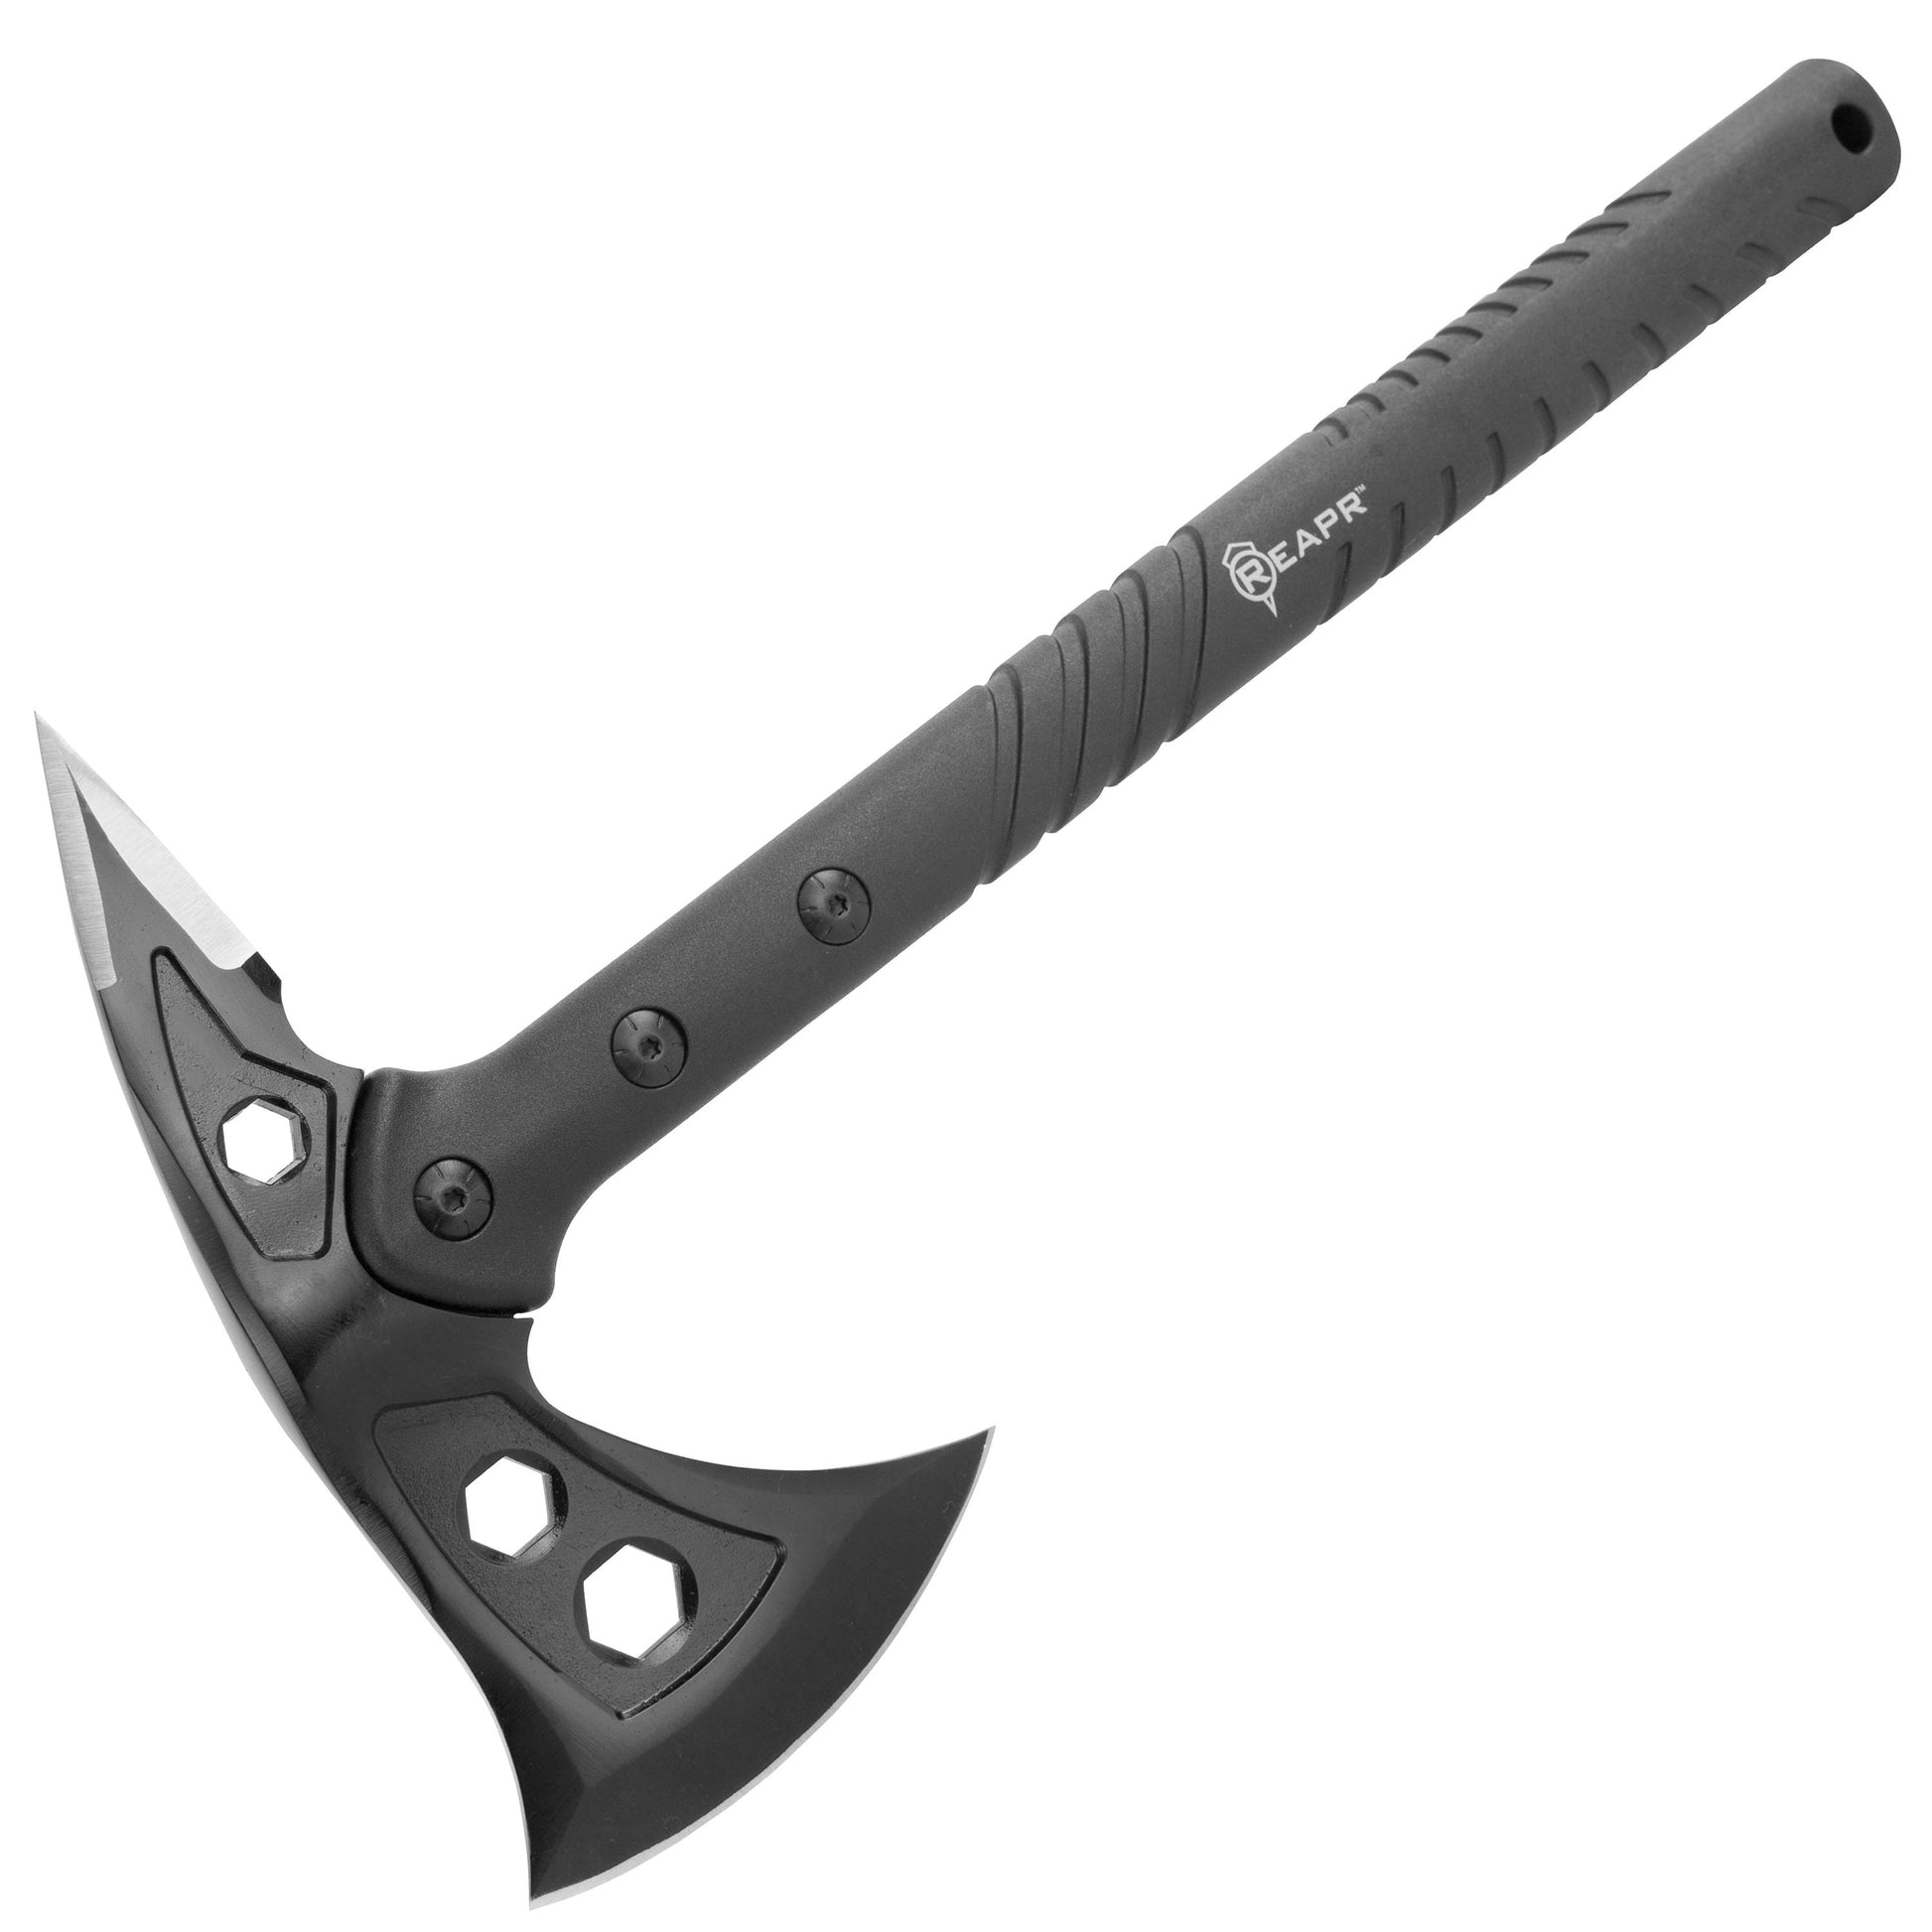 REAPR 11000 TAC Hawk Axe tactical survival axe, dual headed axe features a sharp spike blade